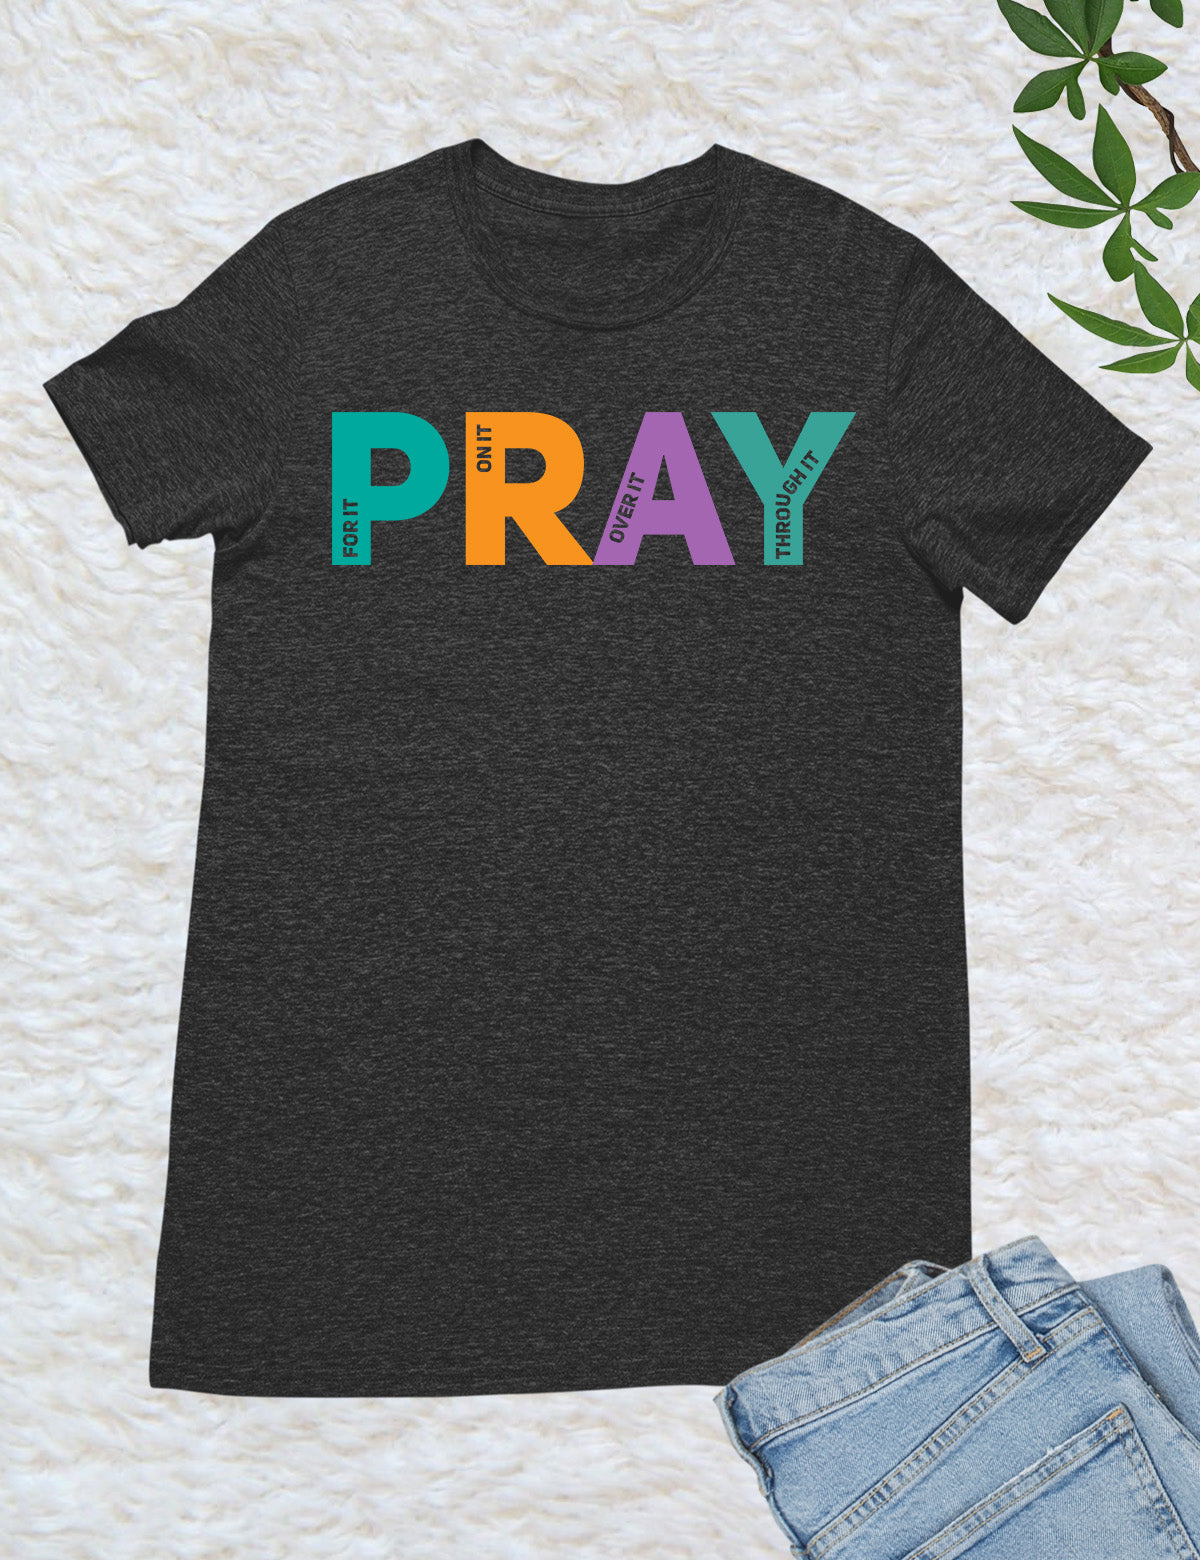 Pray on it Pray over it Pray Through it Shirt